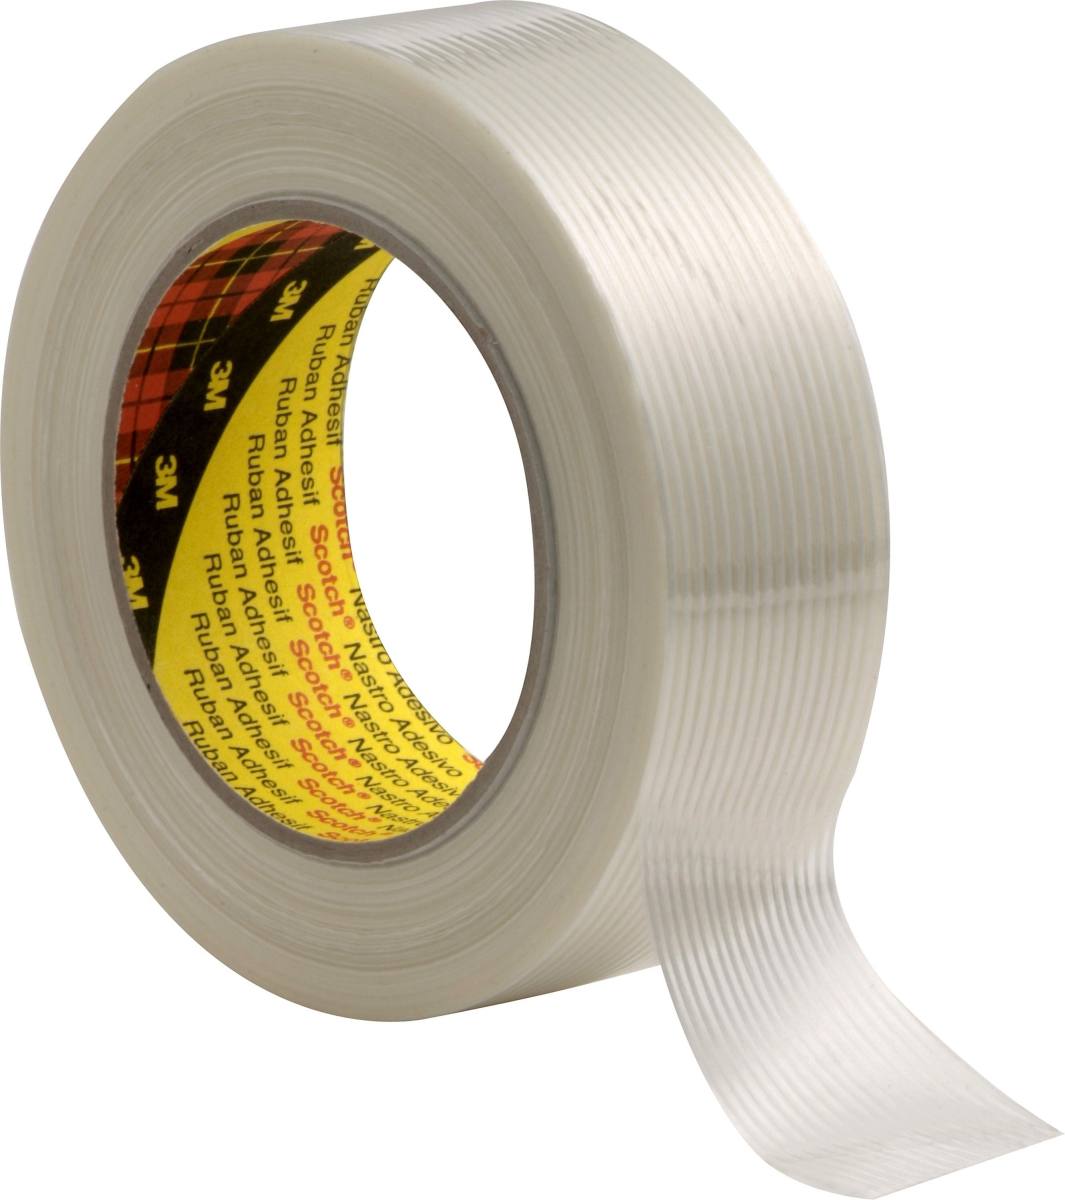 3M Scotch Filamentklebeband 8915, Transparent, 48 mm x 55 m, 0,15 mm